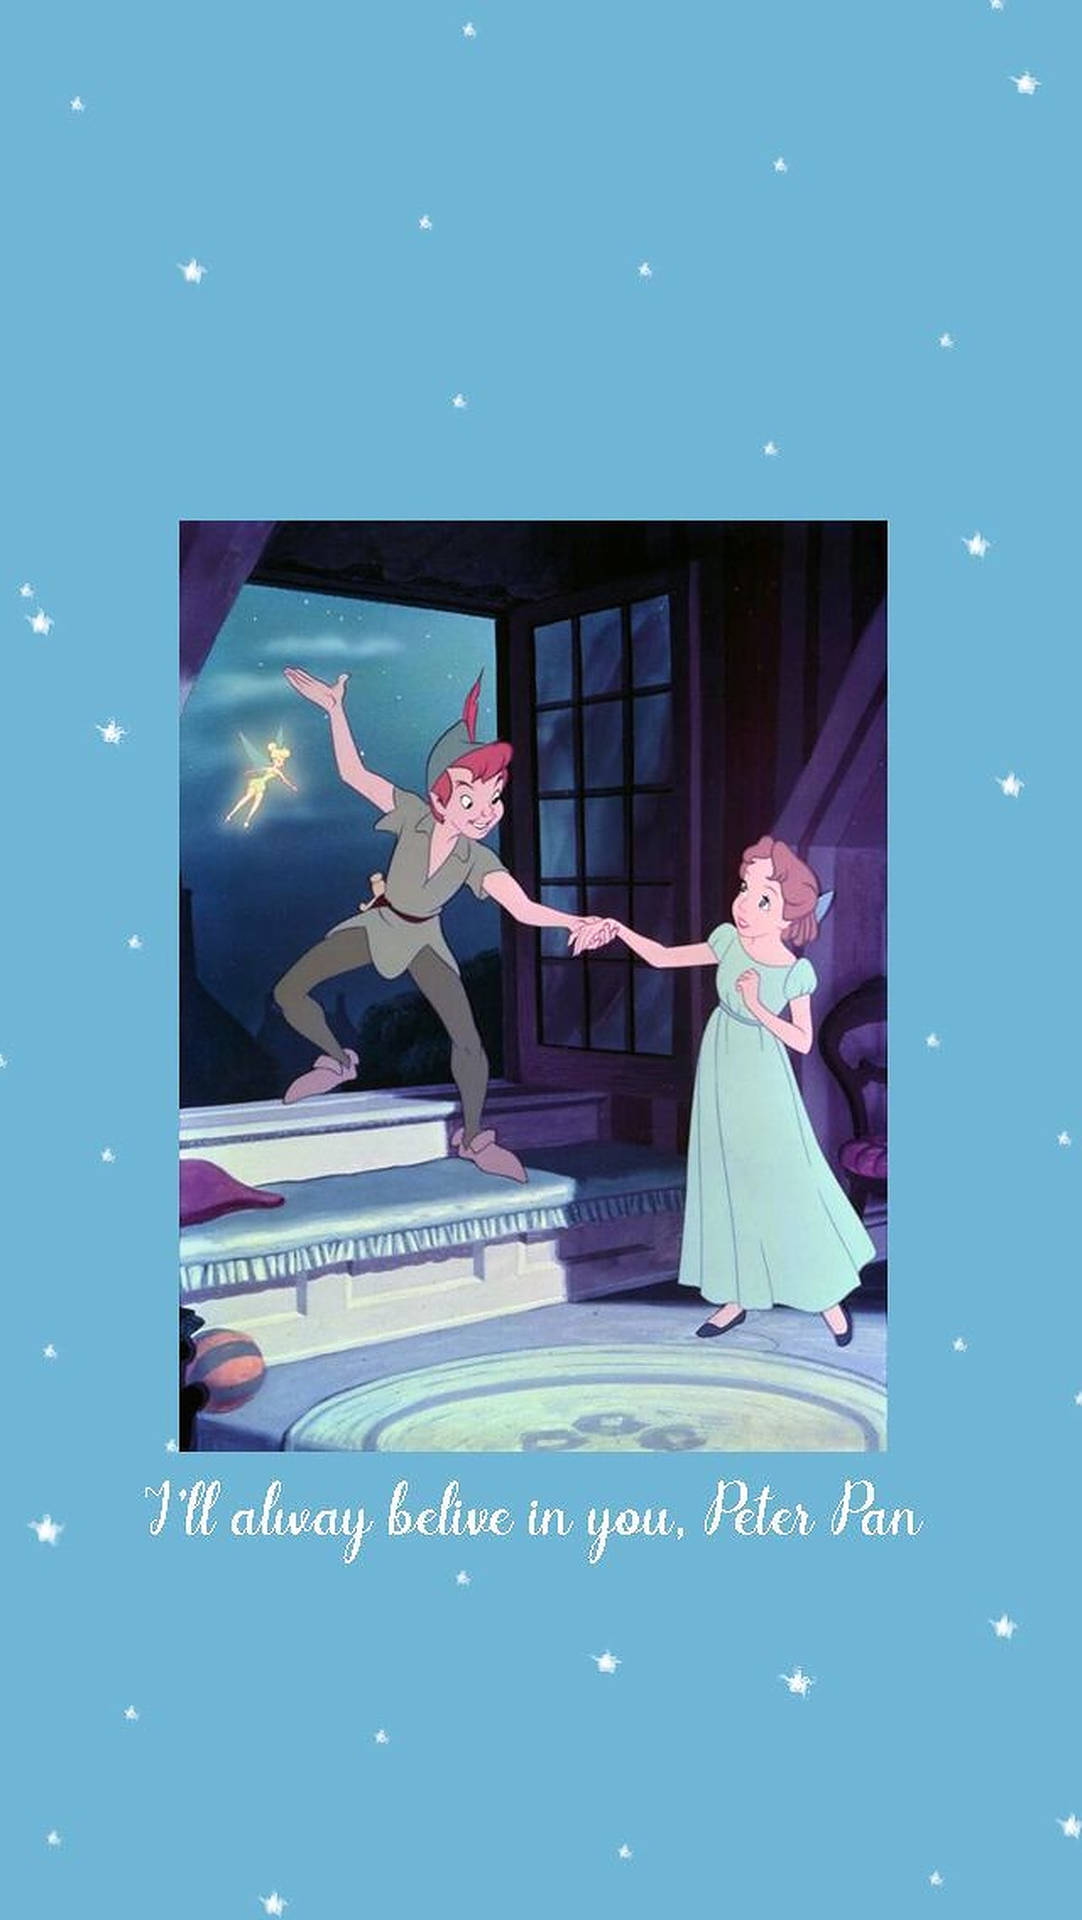 Peter Pan And Wendy Dancing